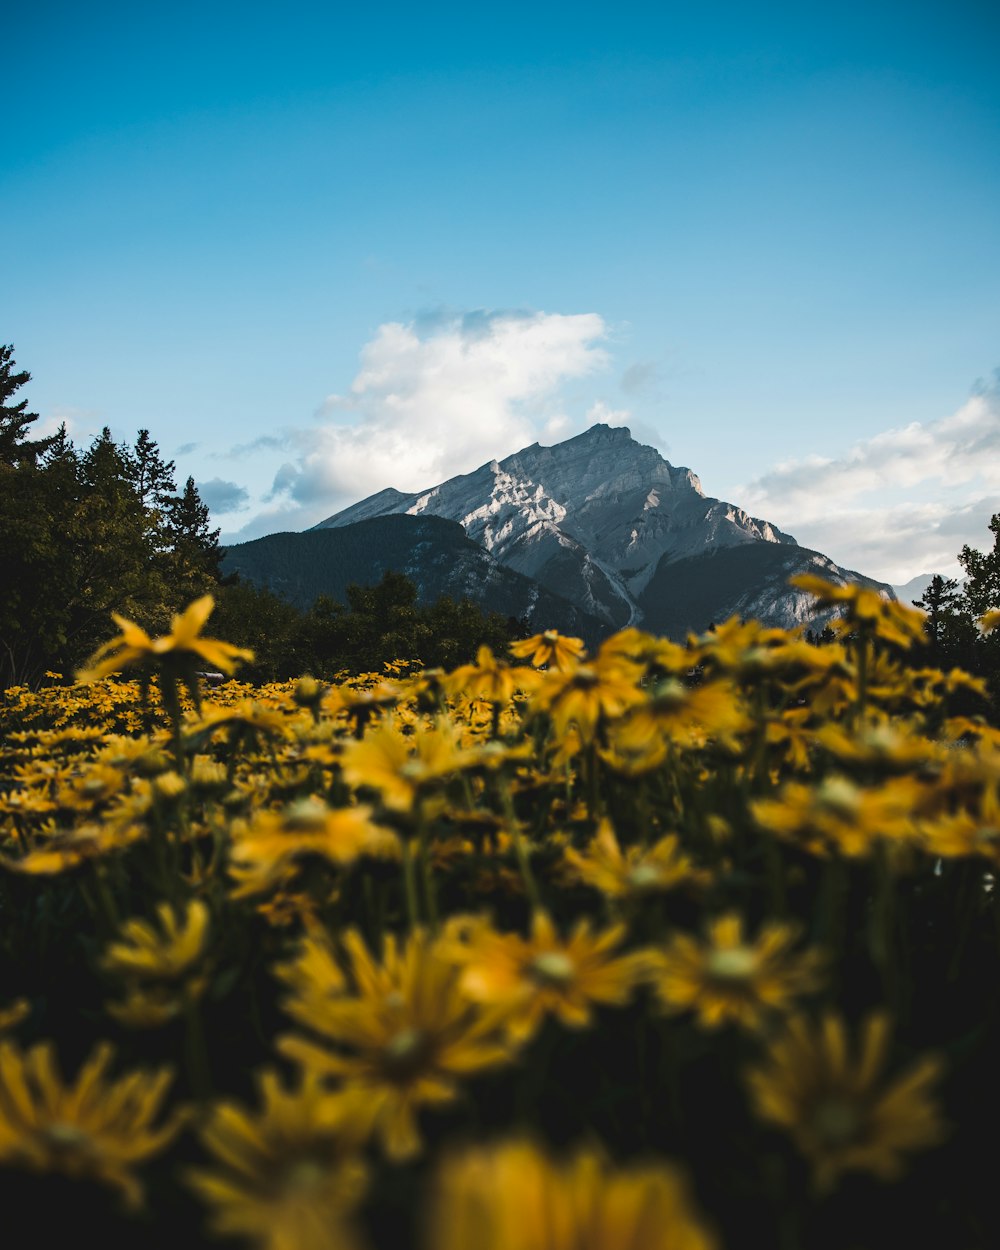 yellow flower field near mountain under blue sky during daytime